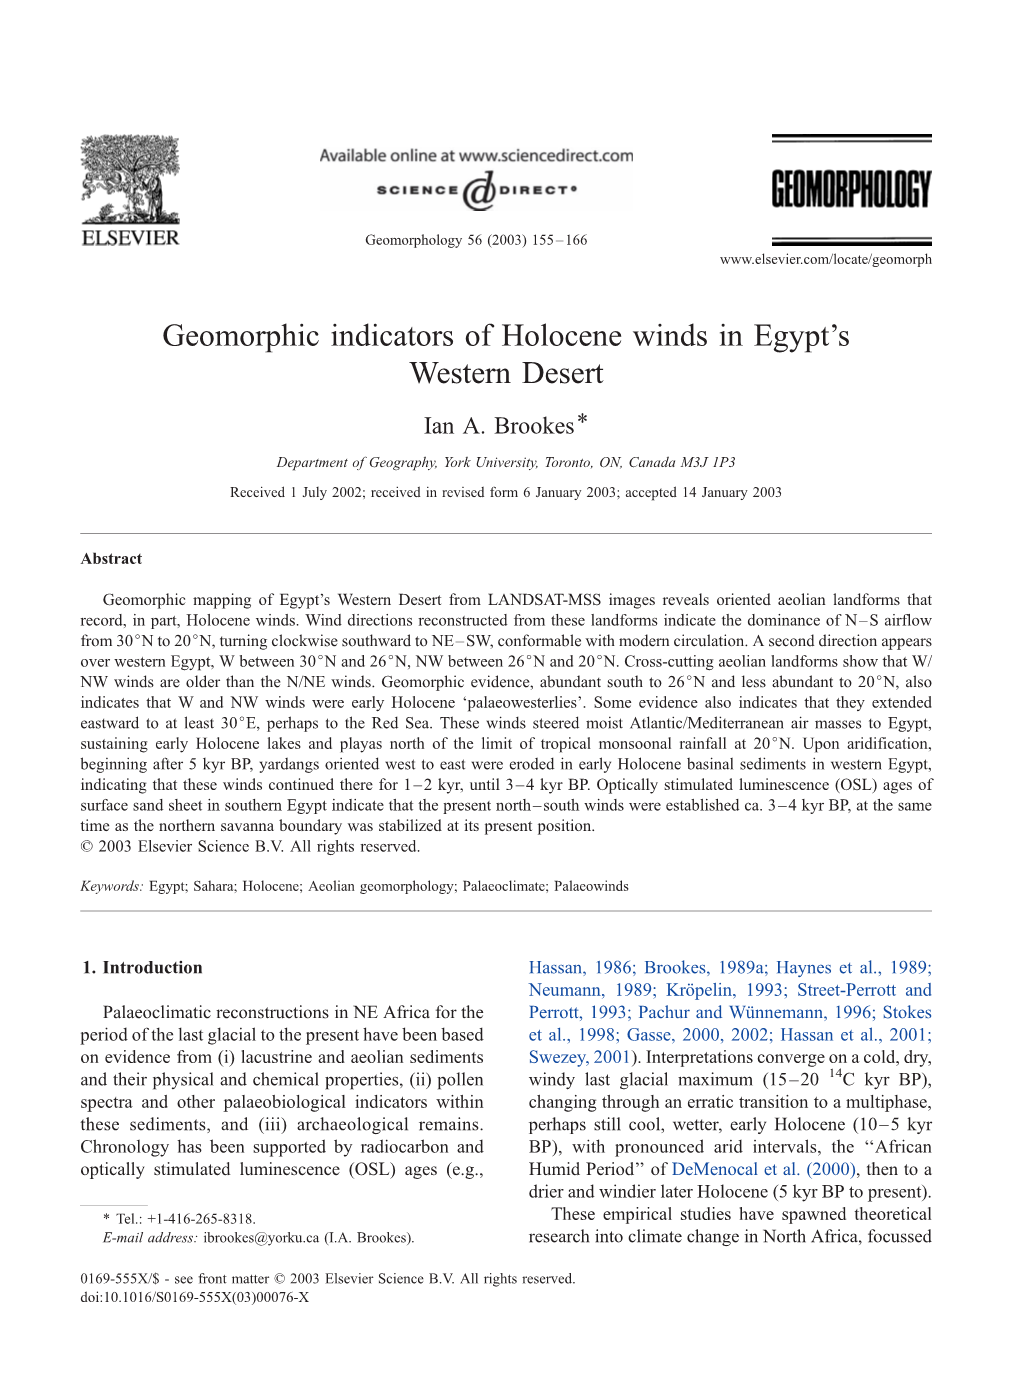 Geomorphic Indicators of Holocene Winds in Egypt's Western Desert